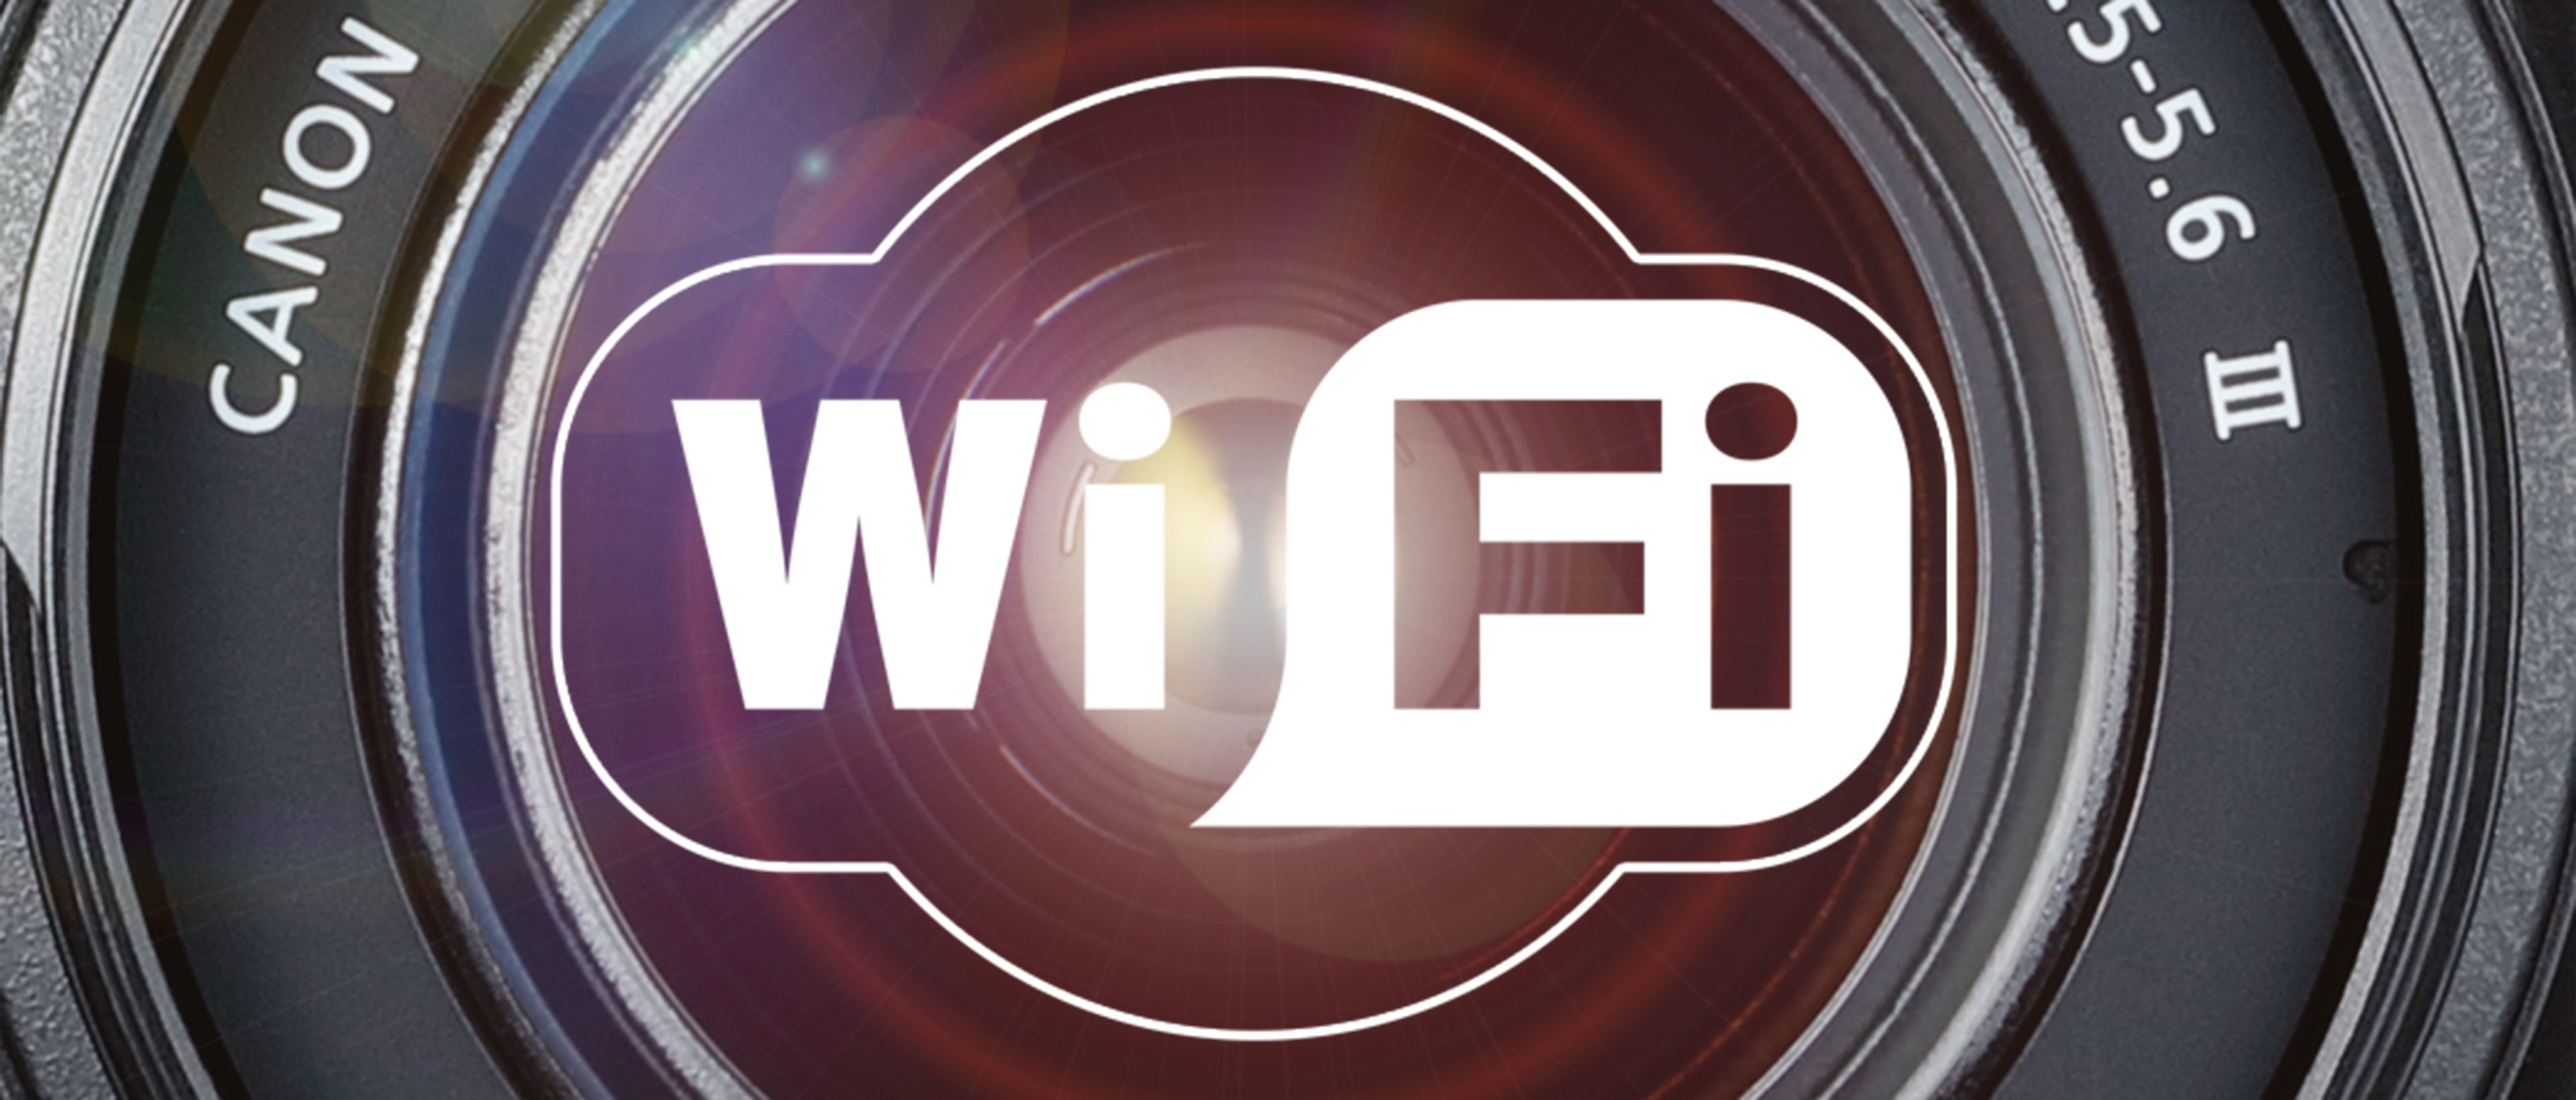 Preview Image: Die Wi-Fi-Funktion Deiner Kamera